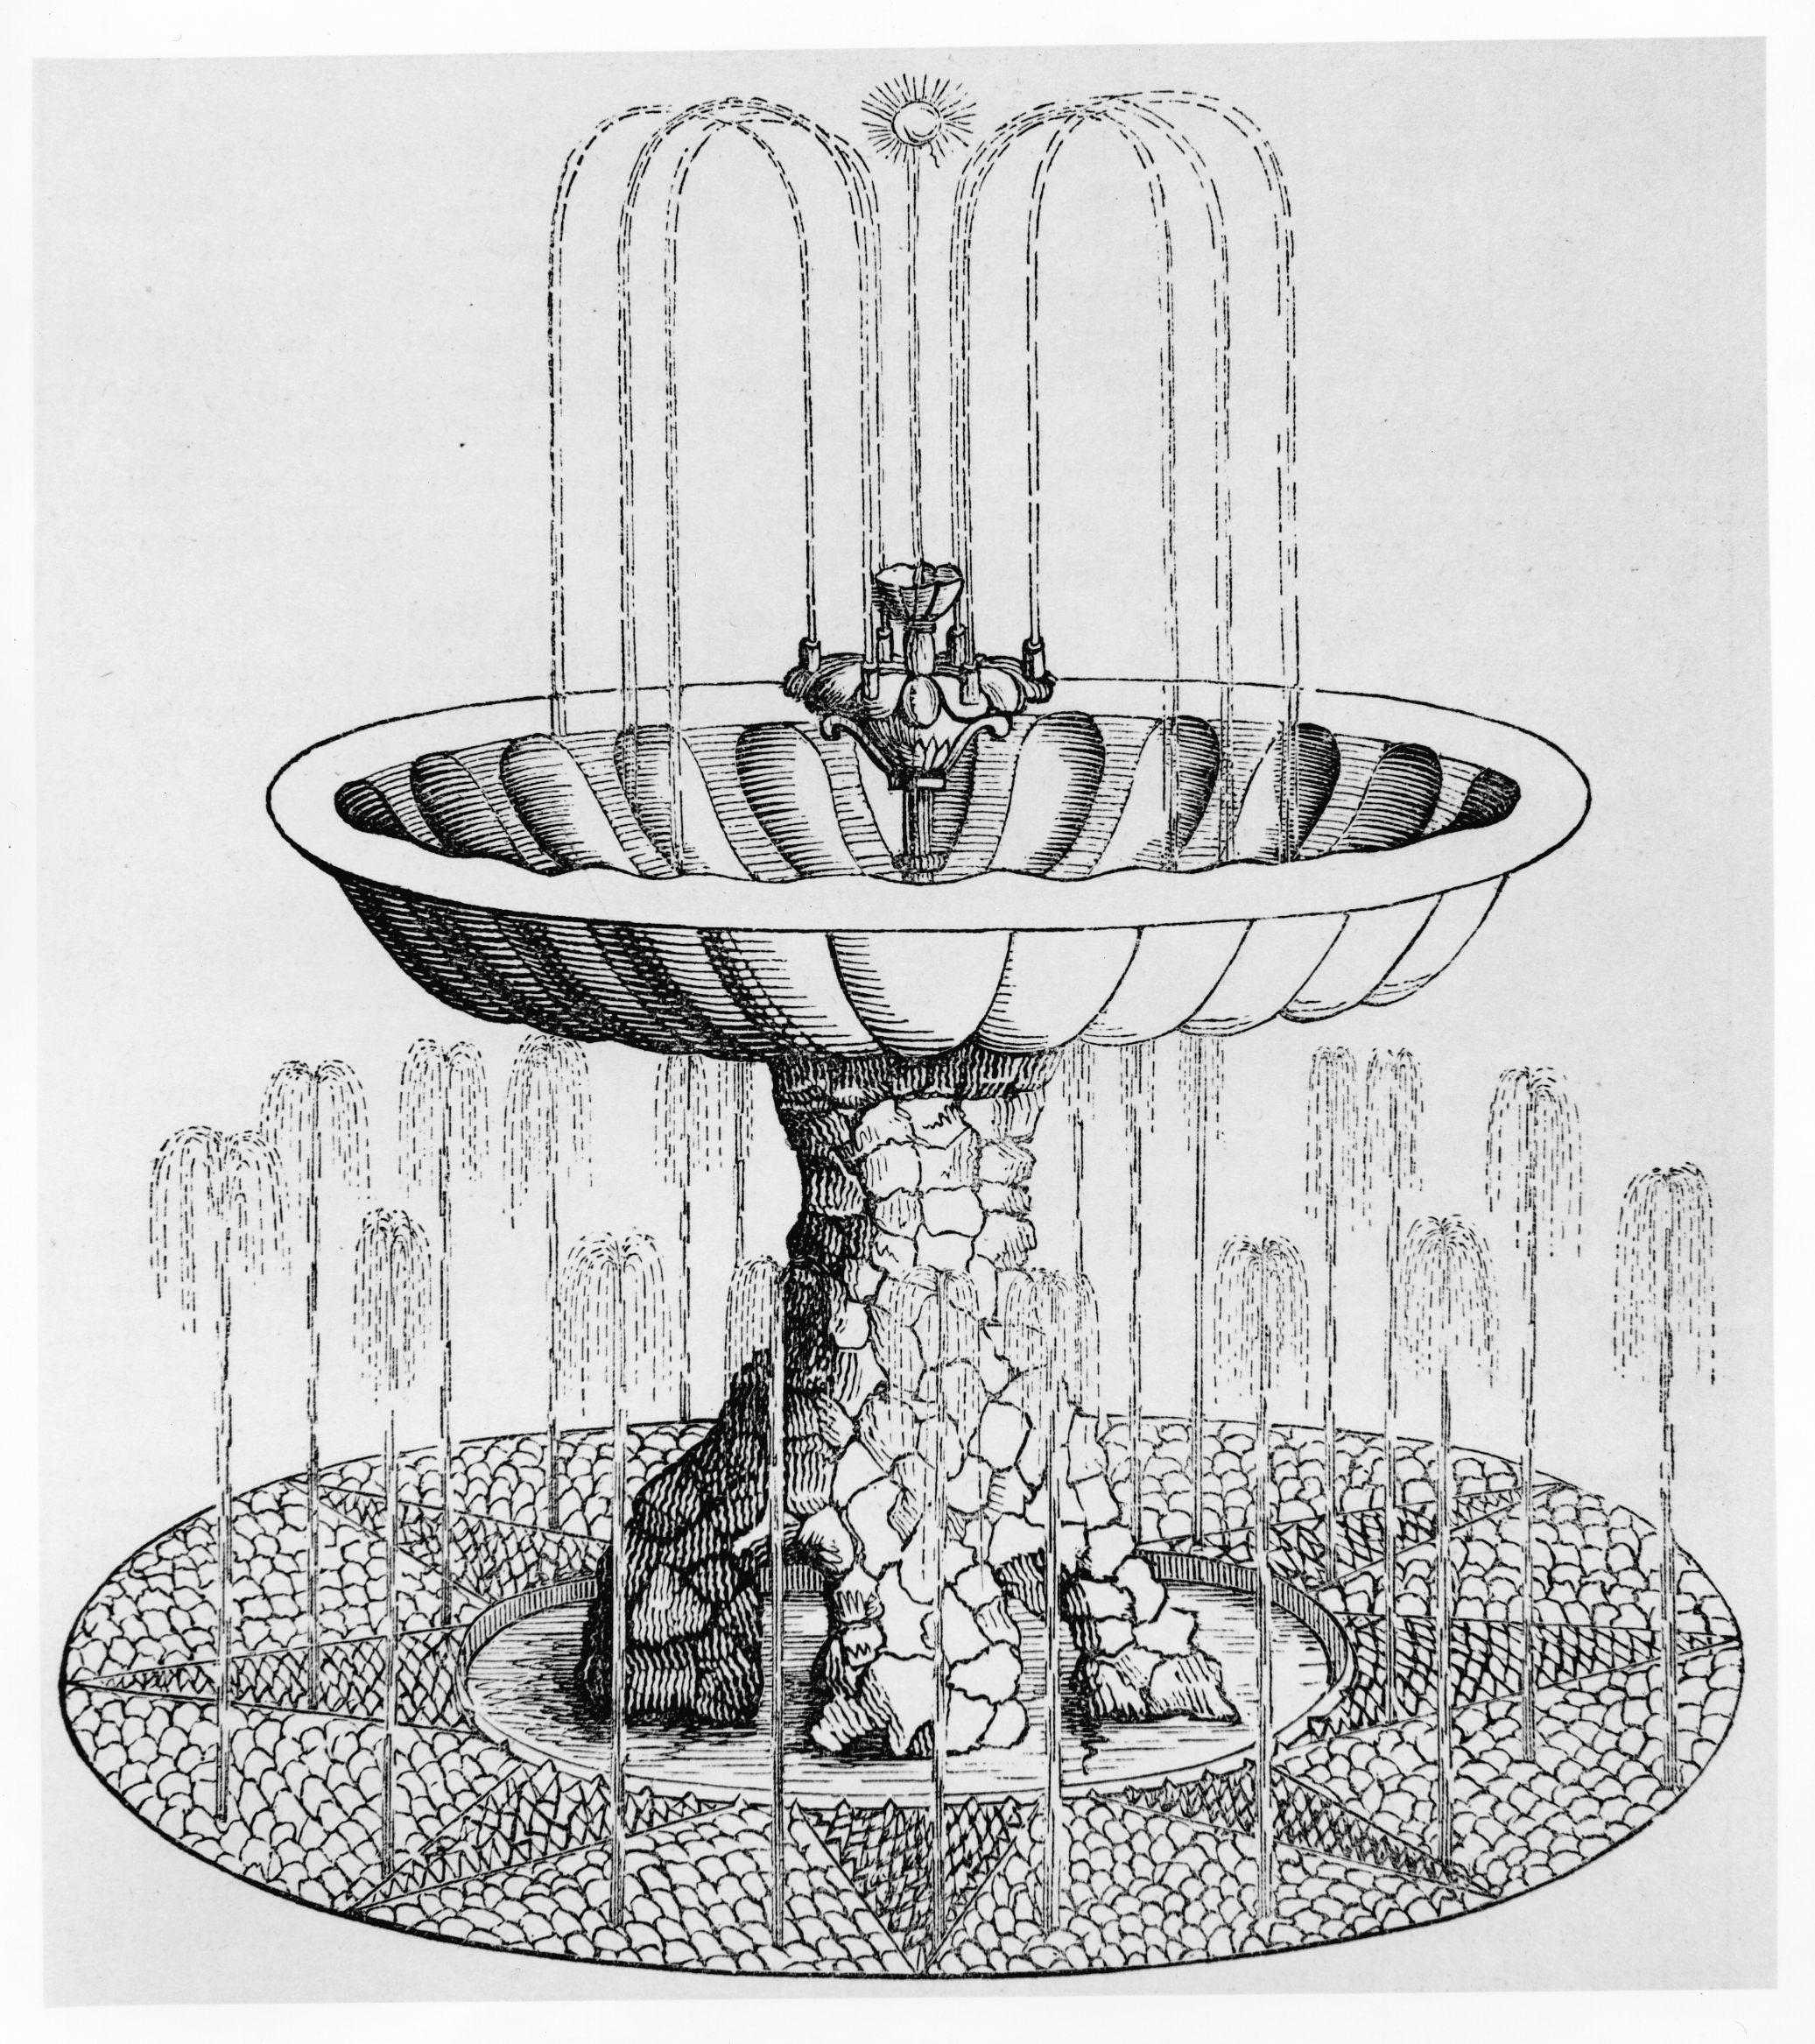 Rustic Dutch fountain, in J. C. Loudon, An Encyclopaedia of Gardening (1834), p. 63, fig. 43.